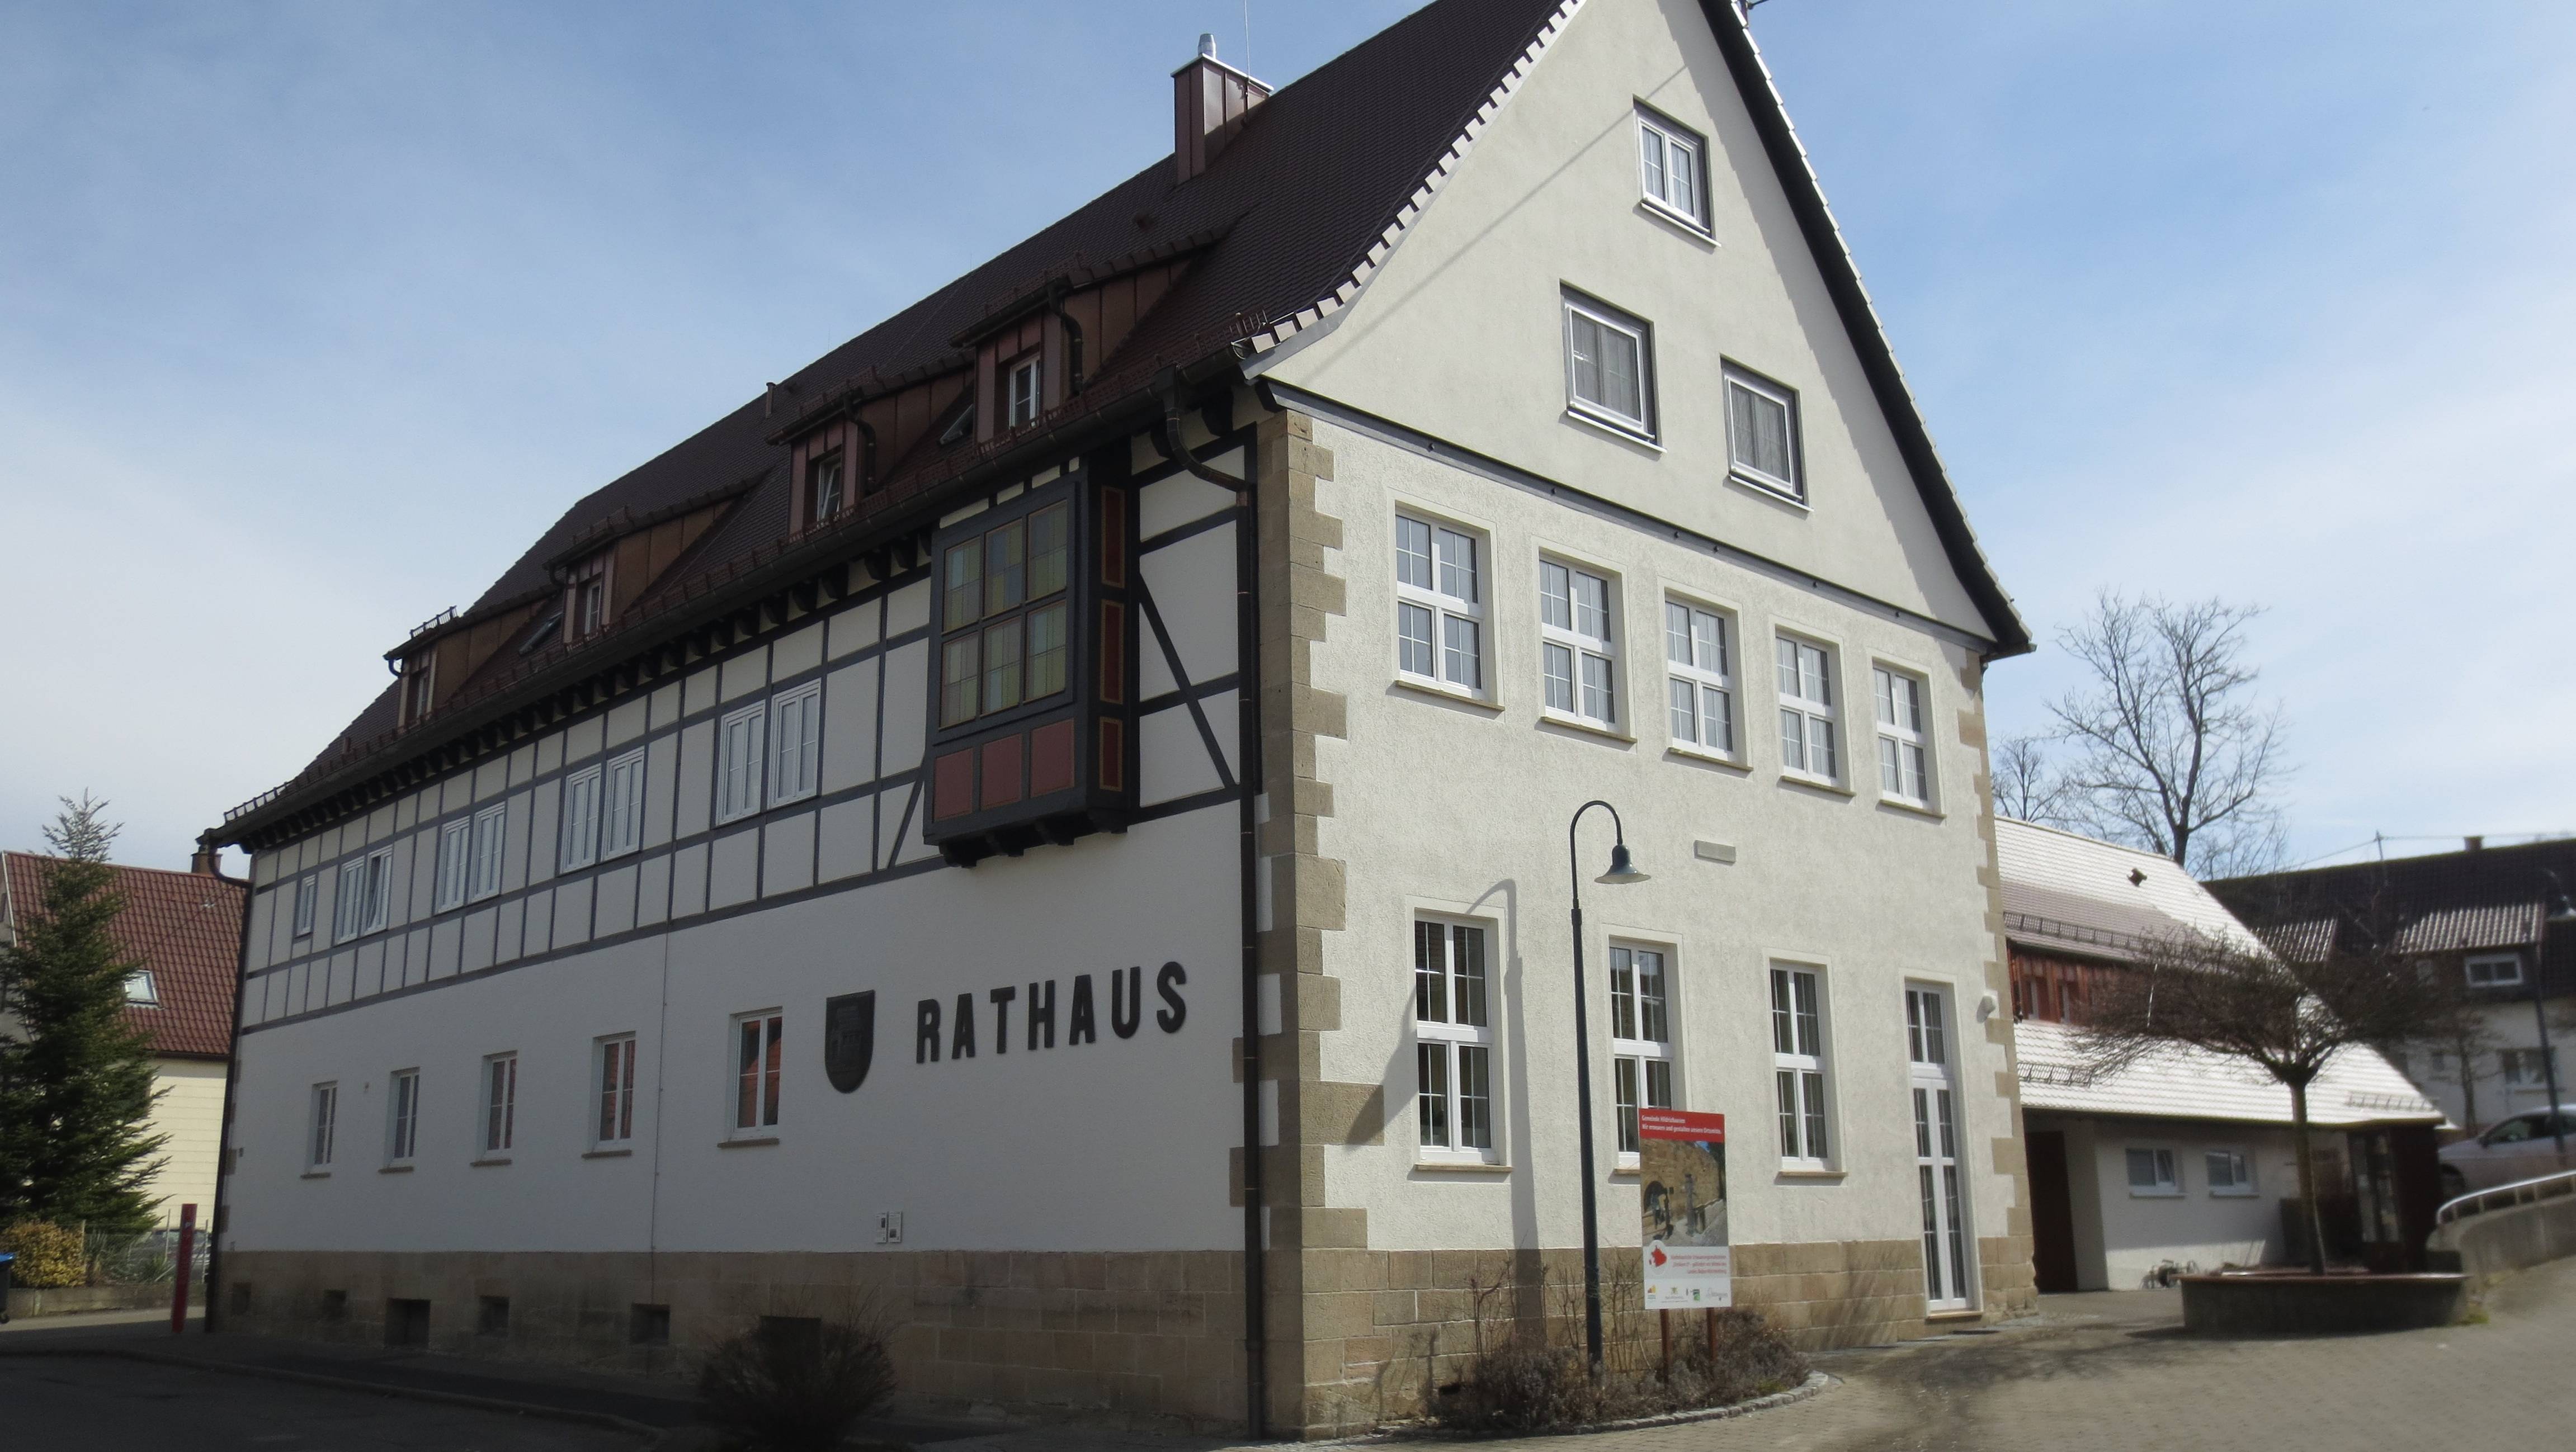  Rathaus 